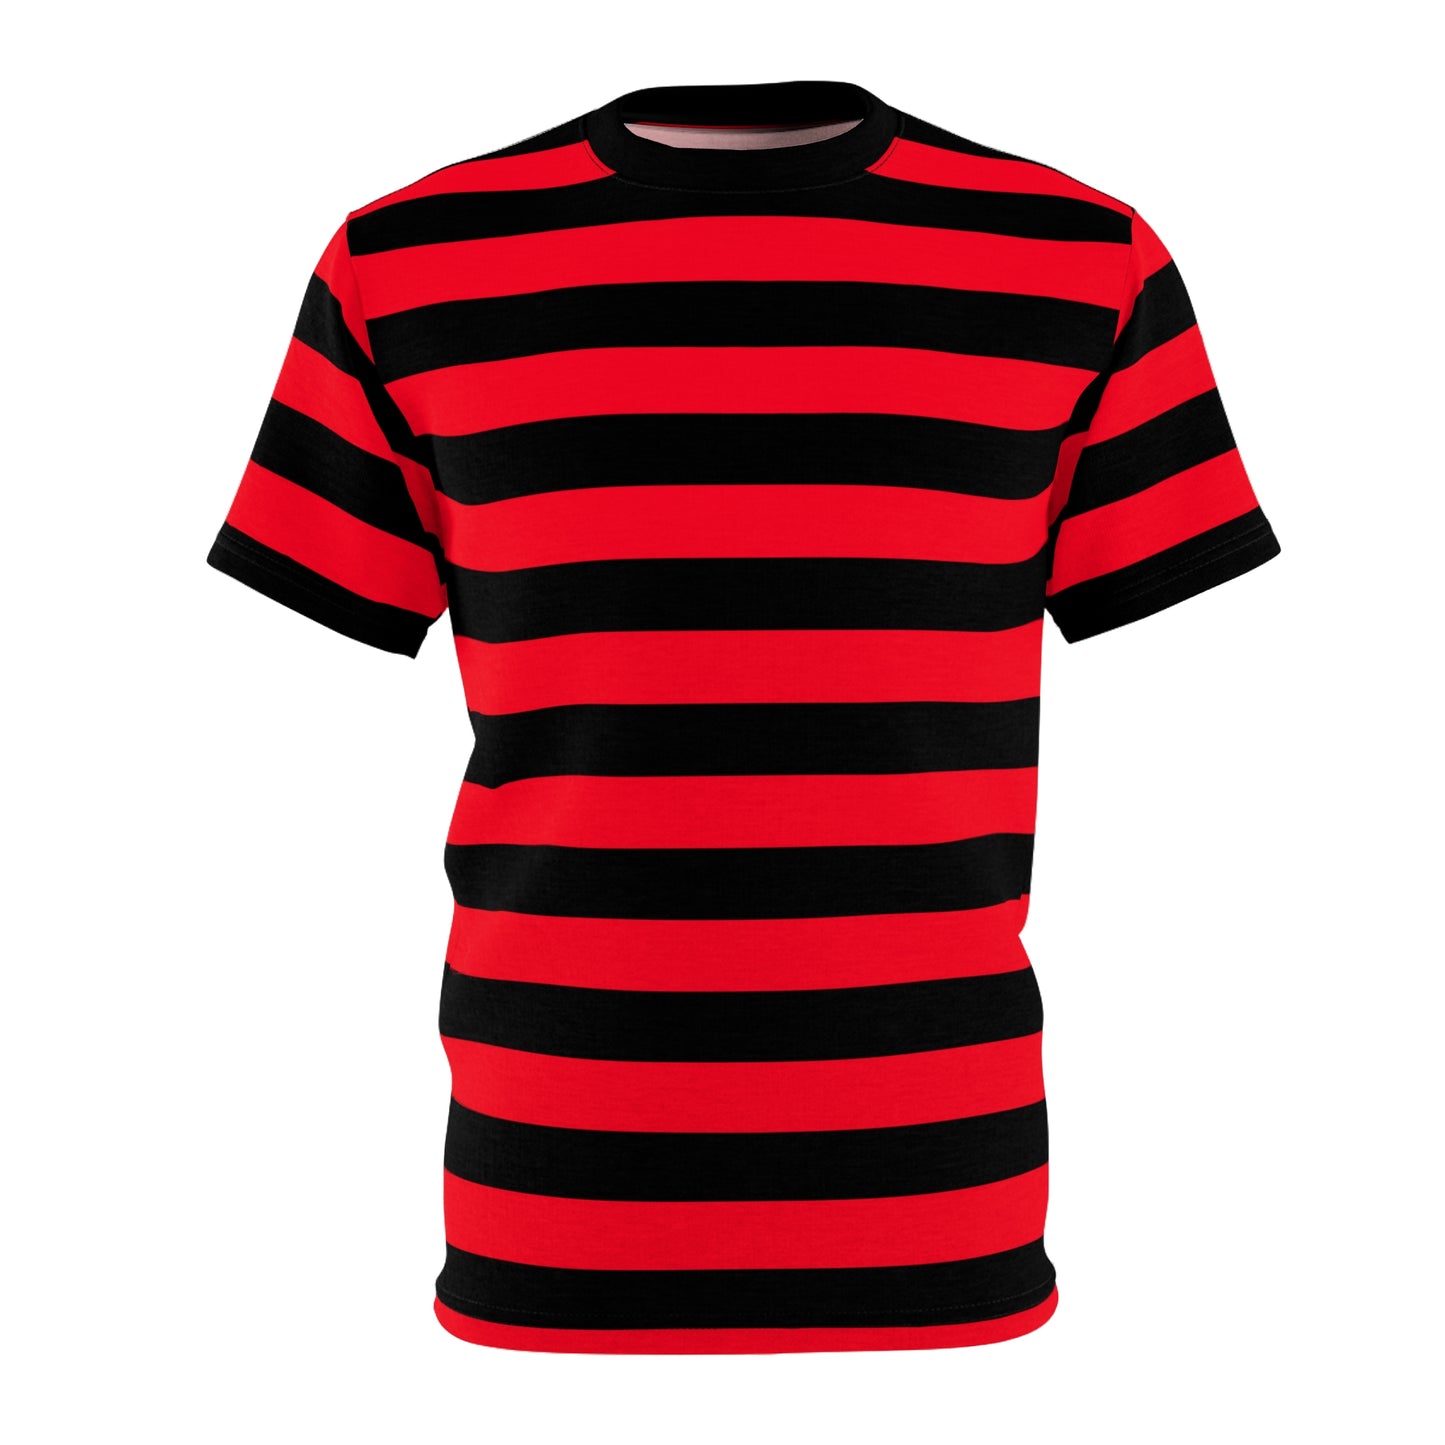 Red and Black Striped Men Tshirt, Horizontal Bold Stripes Designer Lightweight Heavyweight Aesthetic Fashion Crewneck Tee Top Shirt